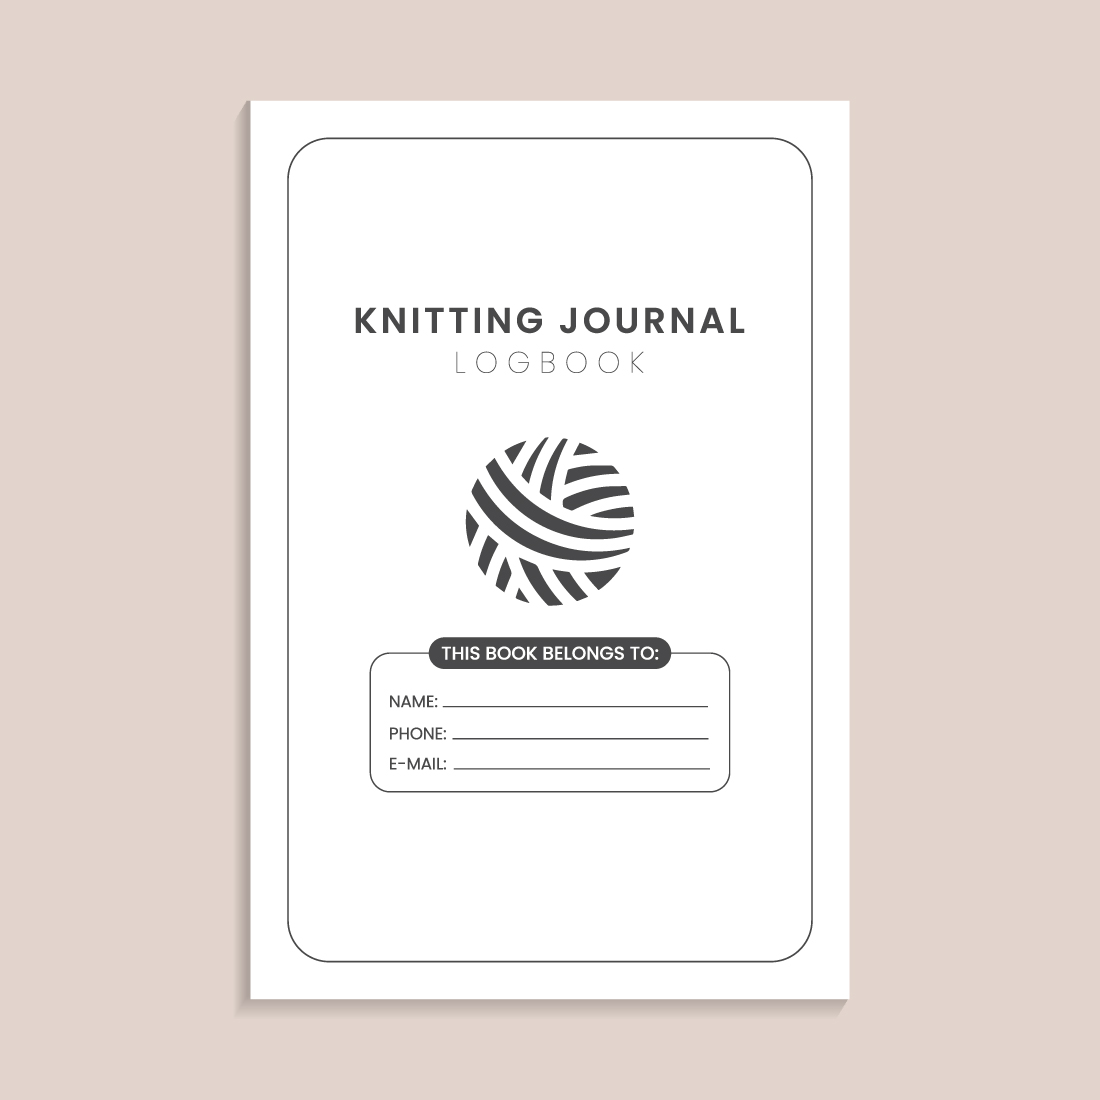 Knitting Journal Logbook (KDP Interior)